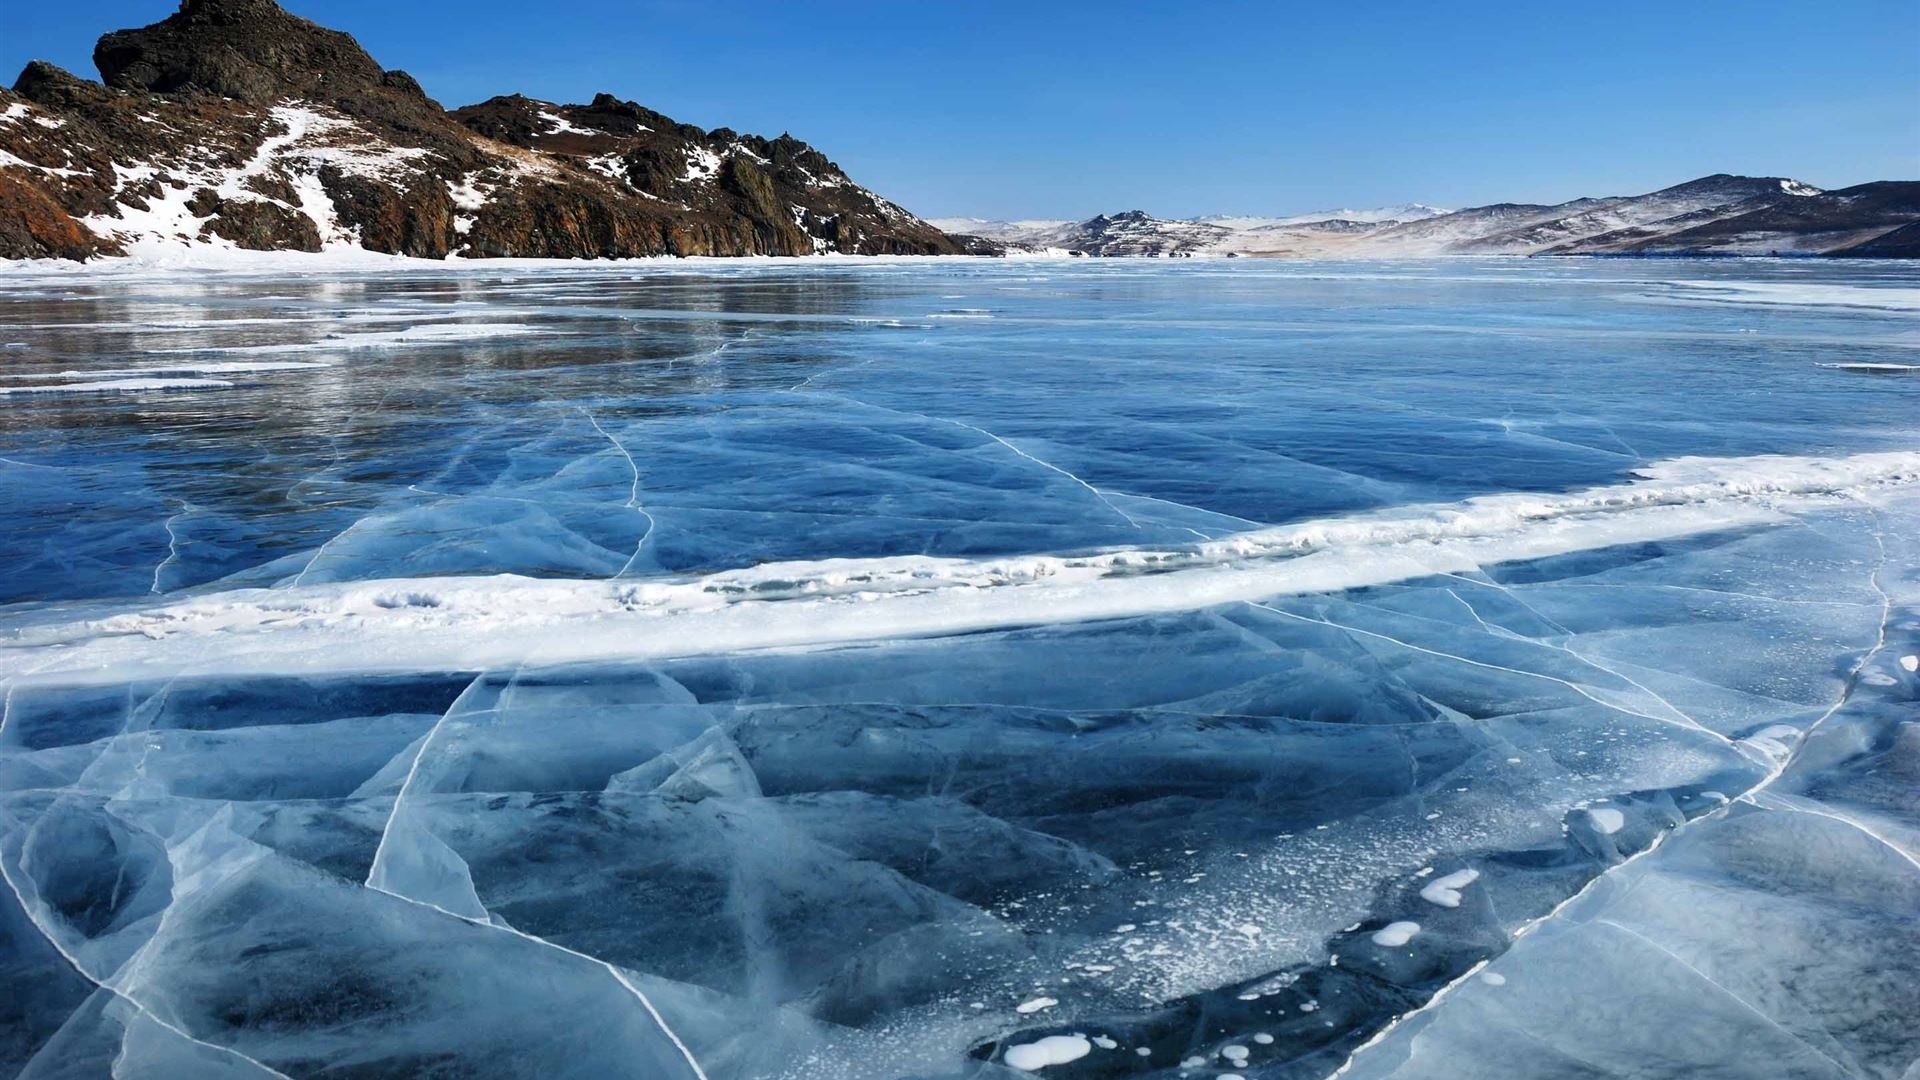 Frozen Baikal lake, Winter landscape, MacBook Air wallpaper, Serene beauty, 1920x1080 Full HD Desktop